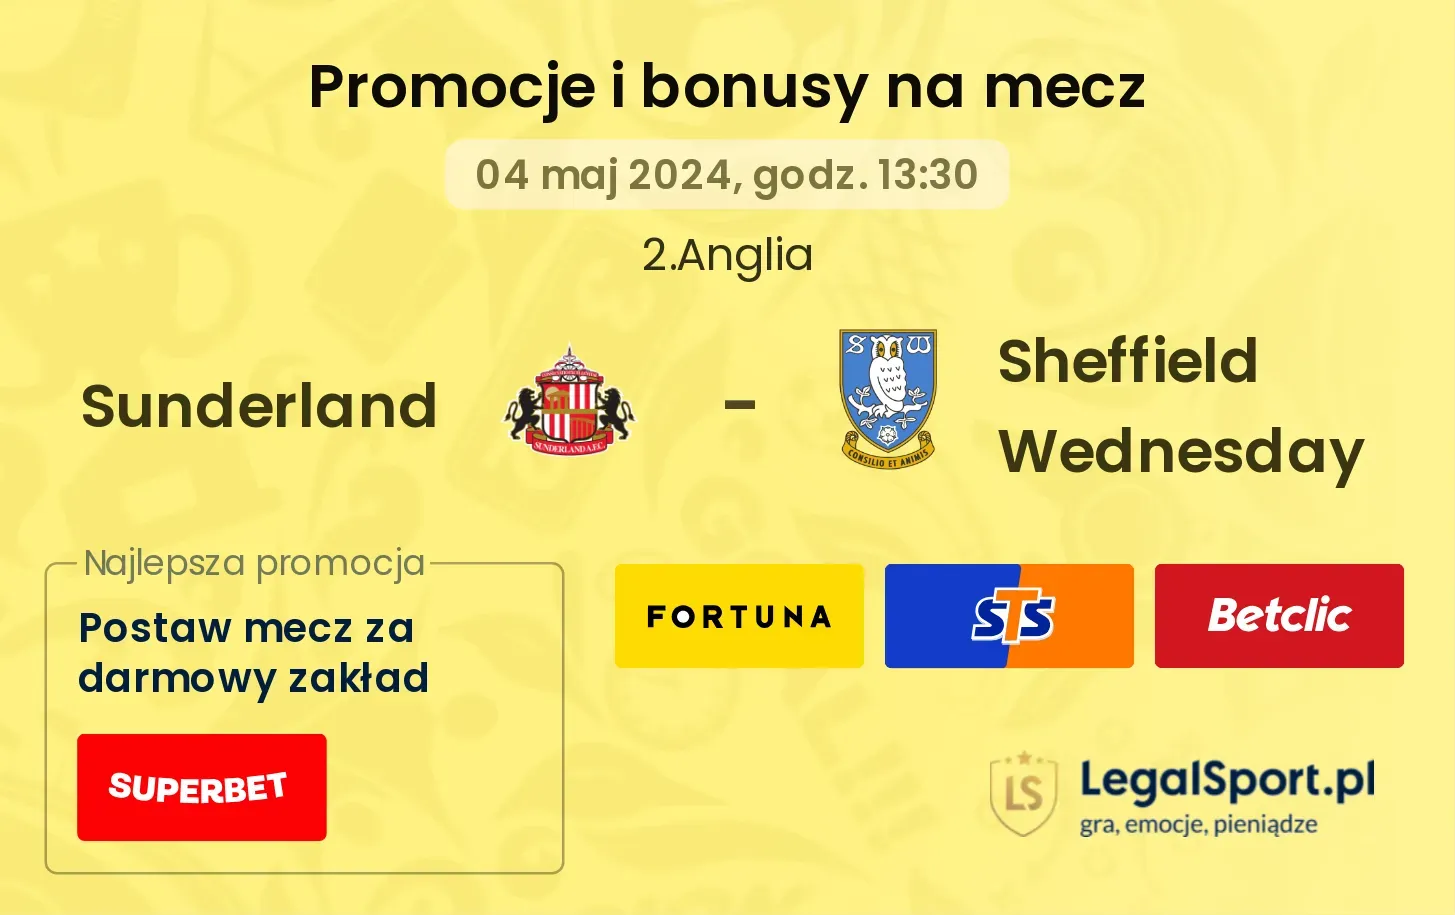 Sunderland - Sheffield Wednesday promocje bonusy na mecz